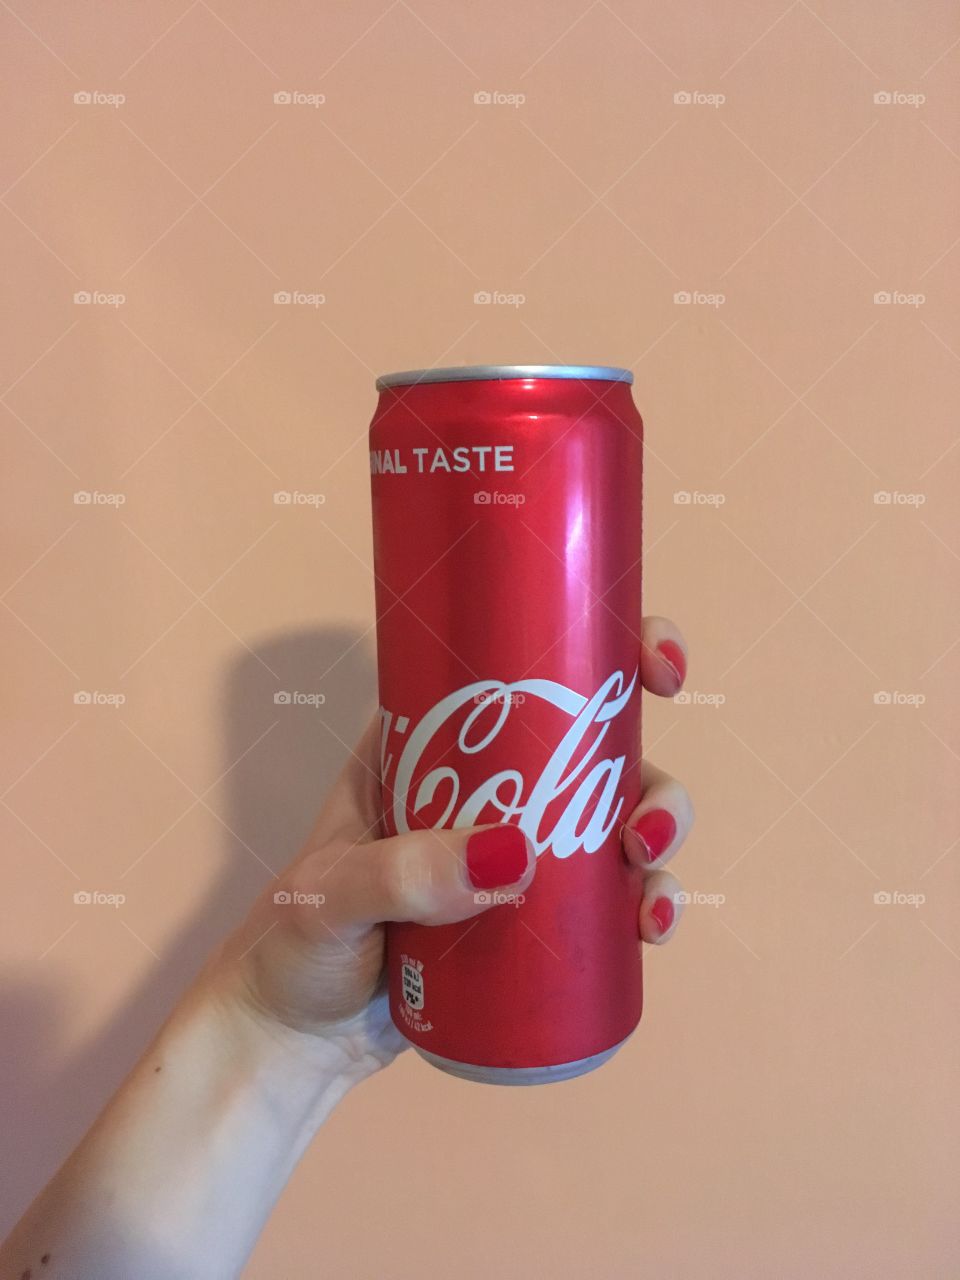 Taste Coca Cola